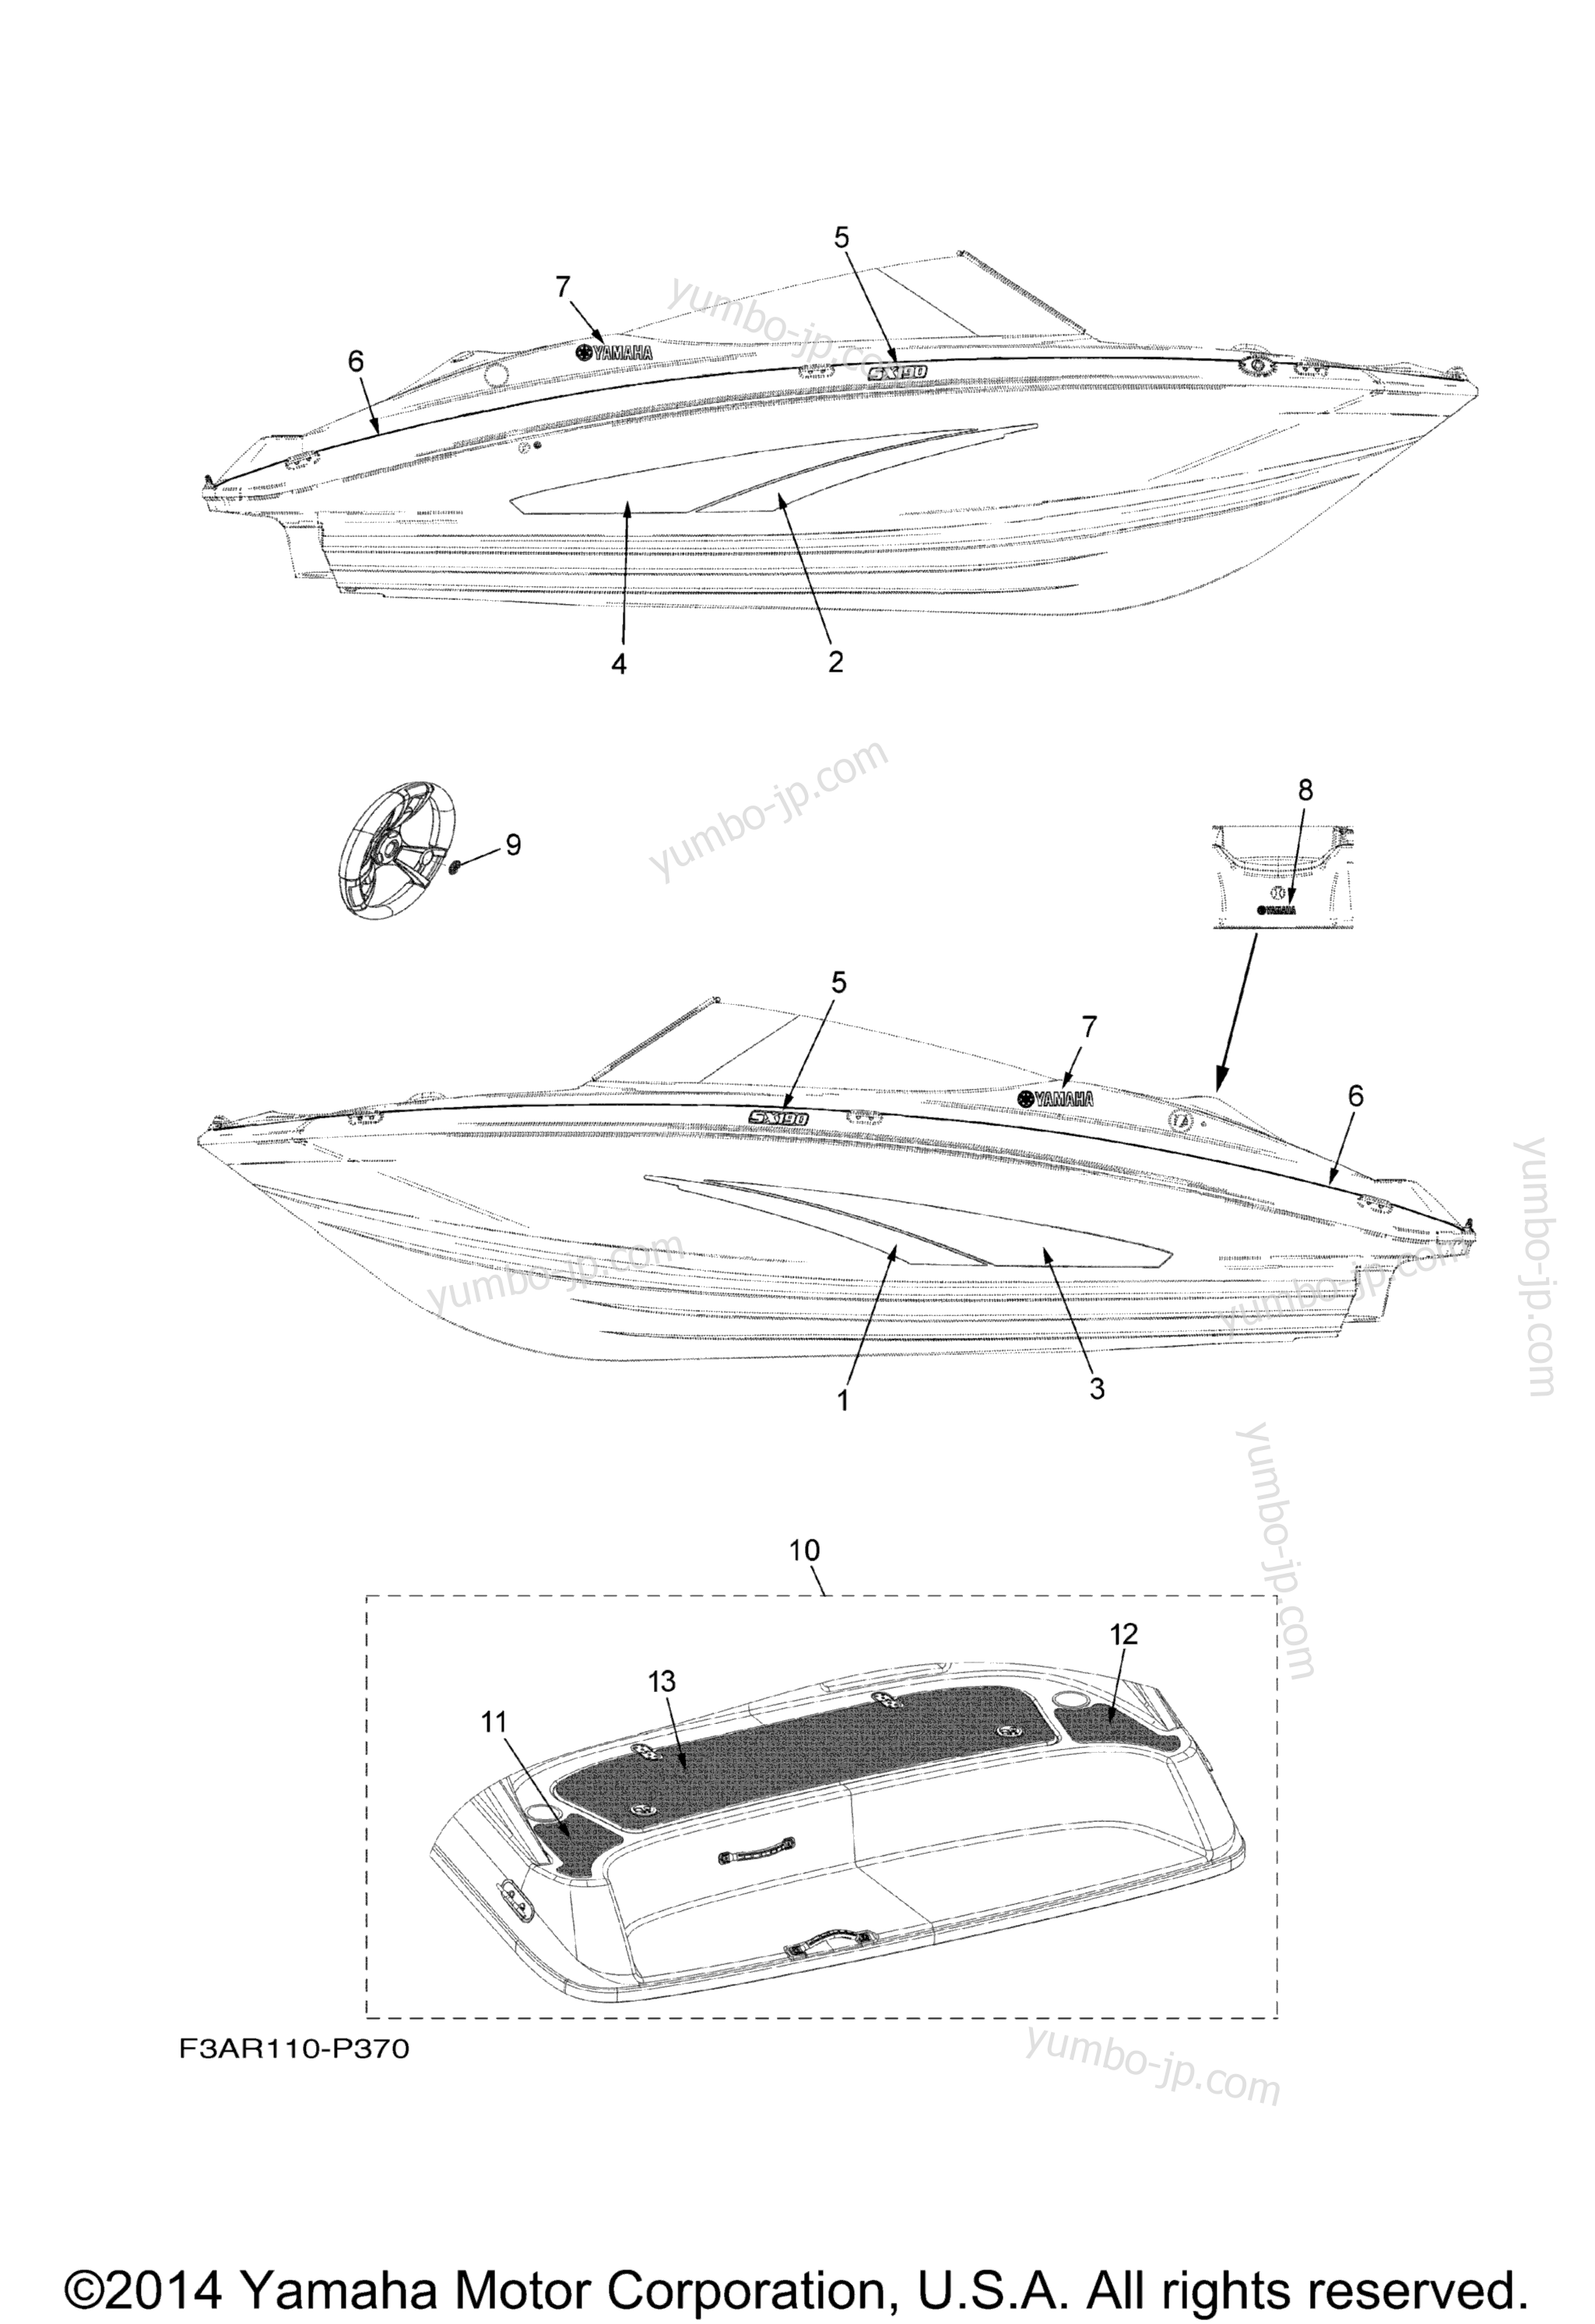 Graphics & Mats for boats YAMAHA SX190 (RX1800DP) 2015 year